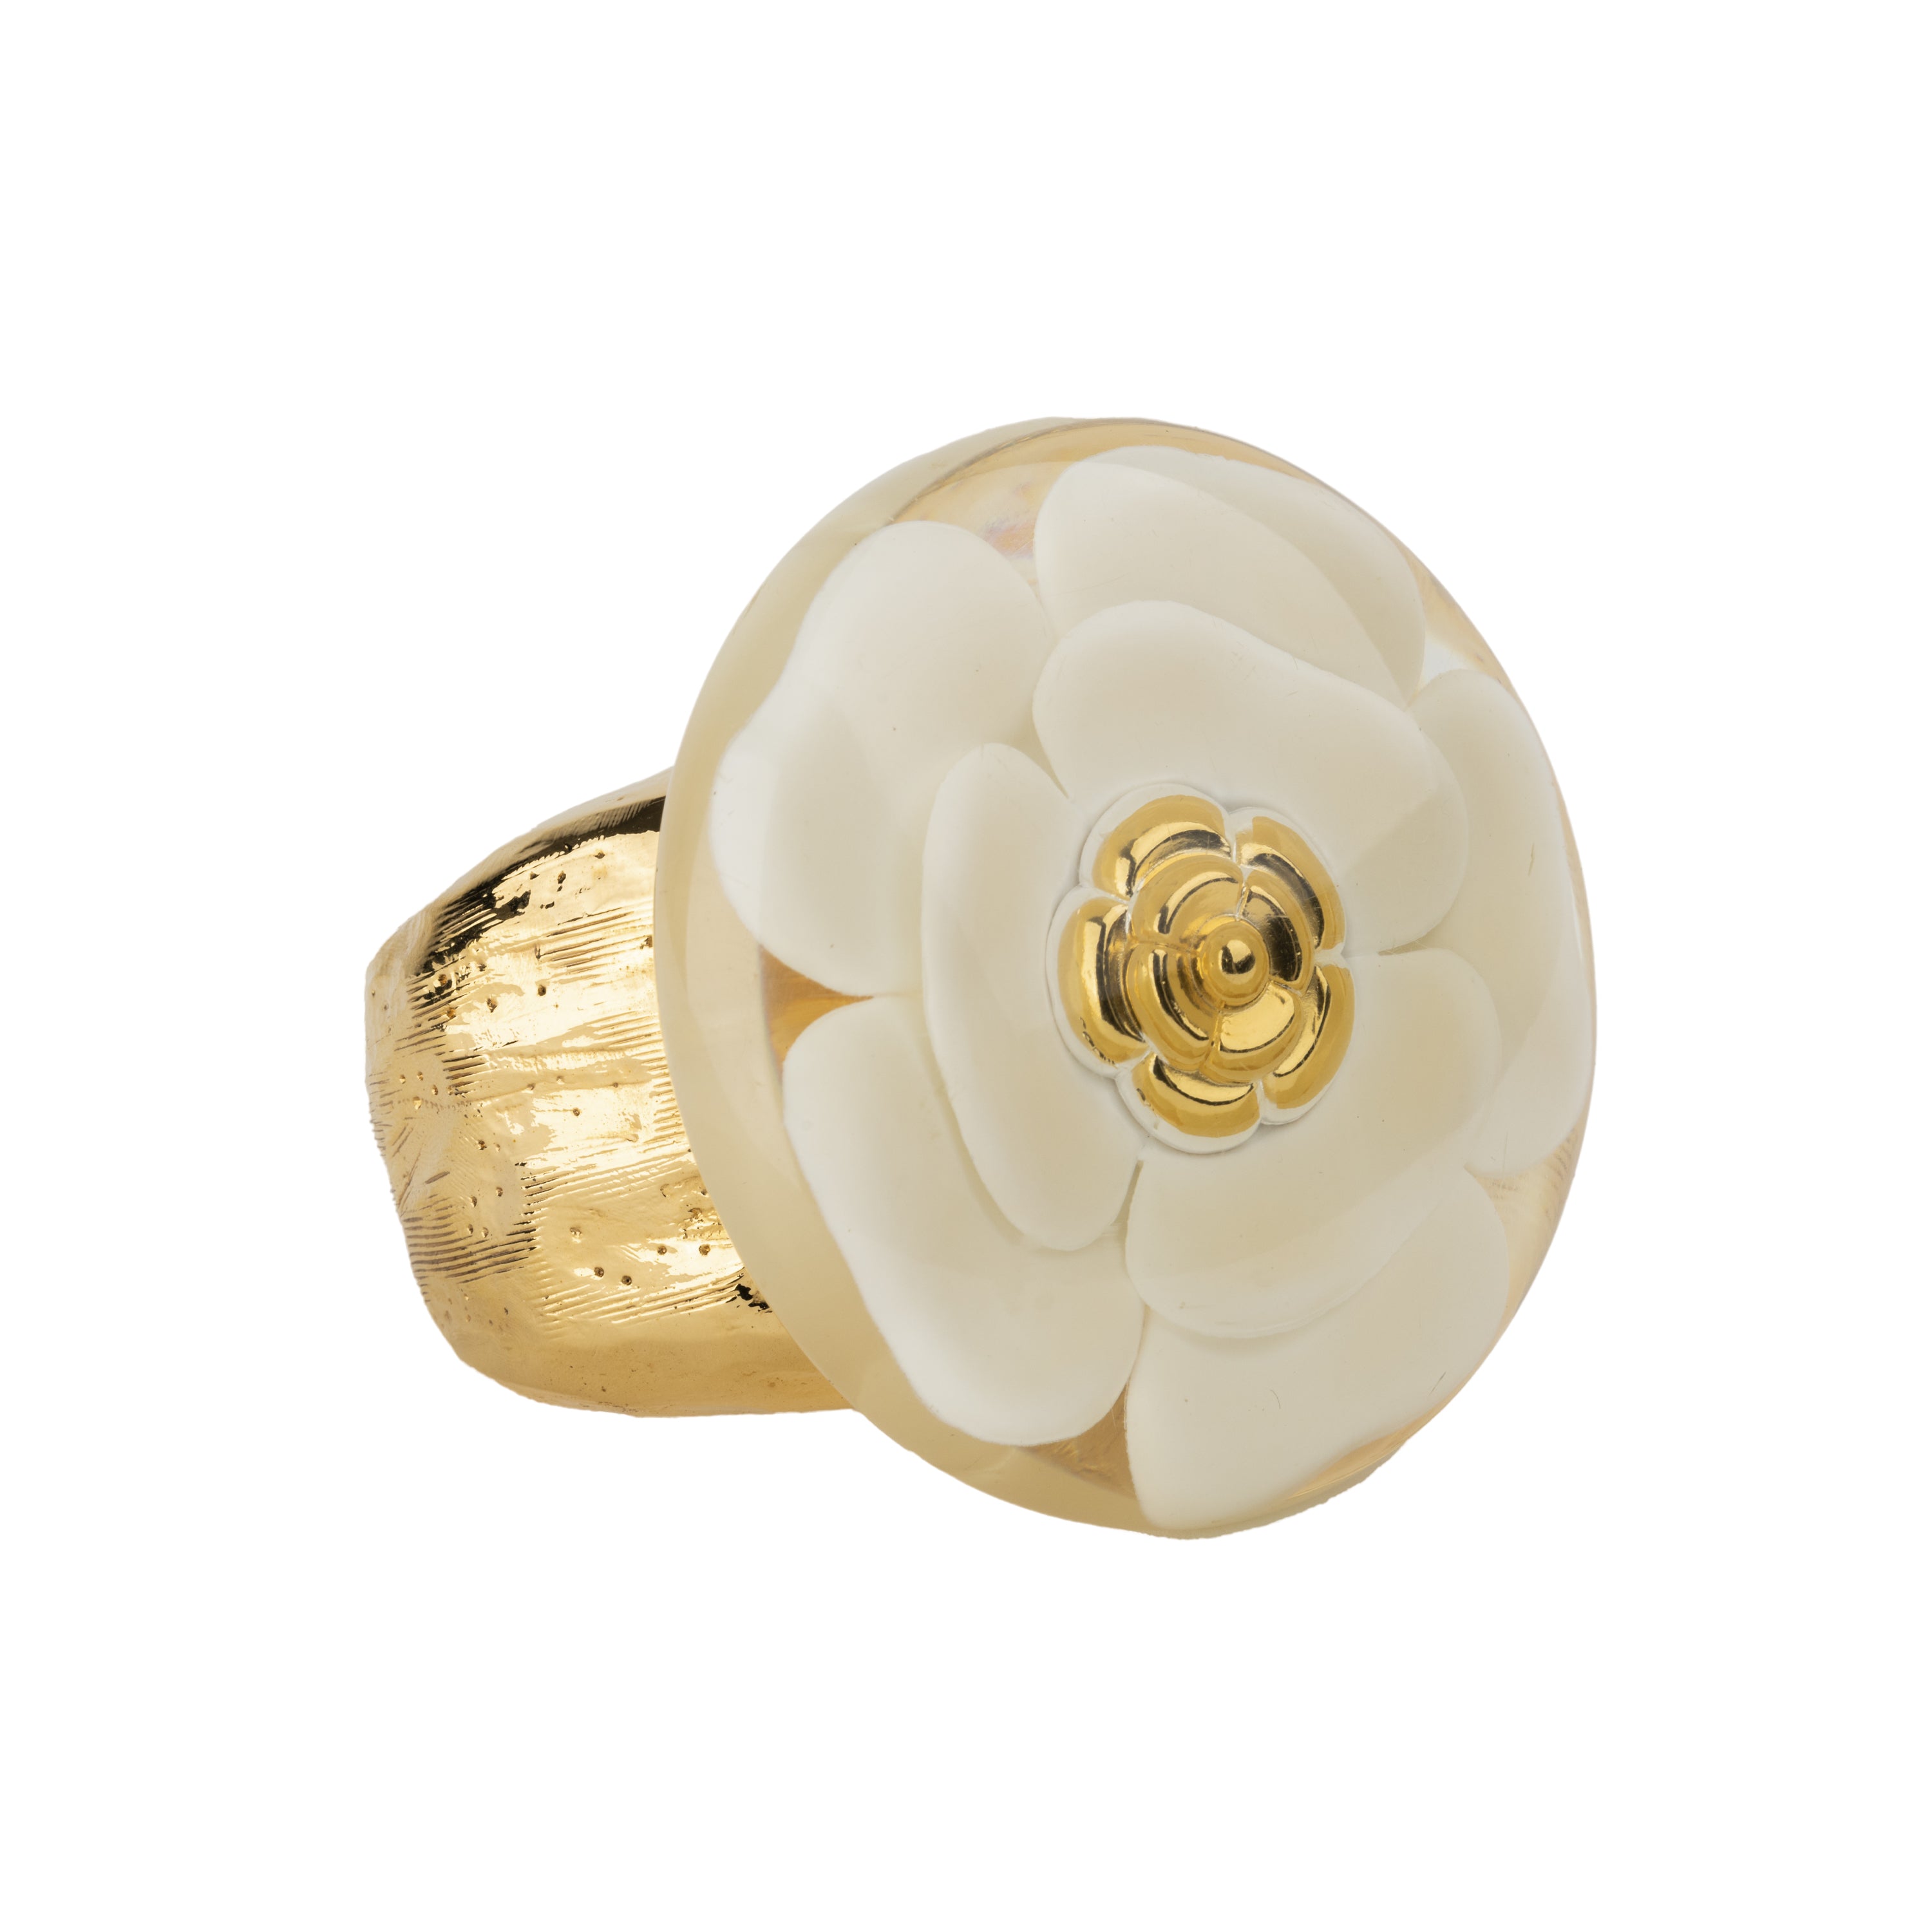 Chanel Camellia CC Crystal Pearl Bracelet Gold Metal Authentic Nib